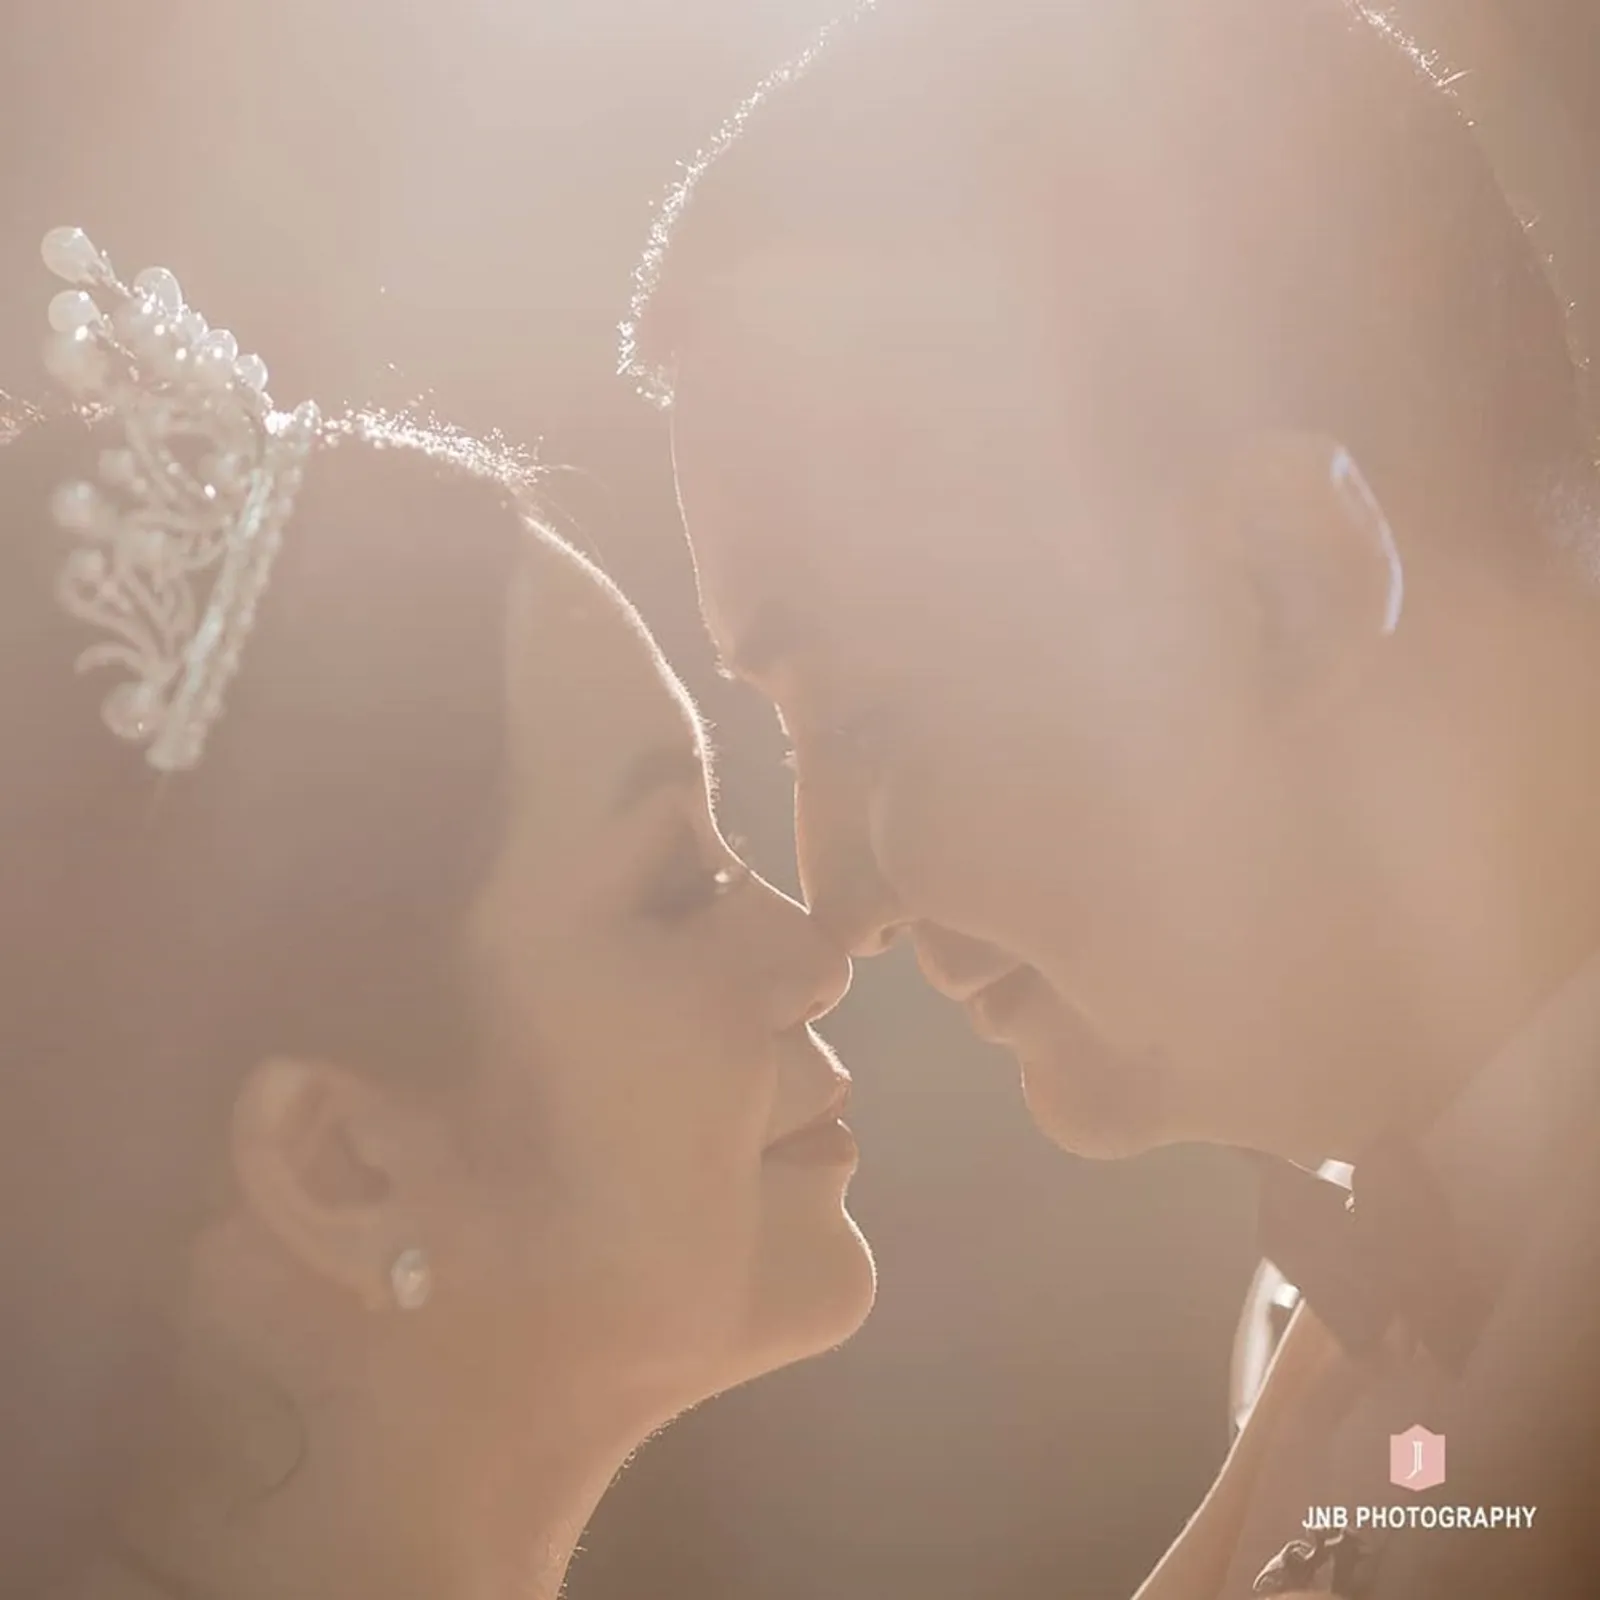 Penuh Kebahagiaan, Ini 9 Foto Pernikahan Joy Tobing dan Perwira TNI